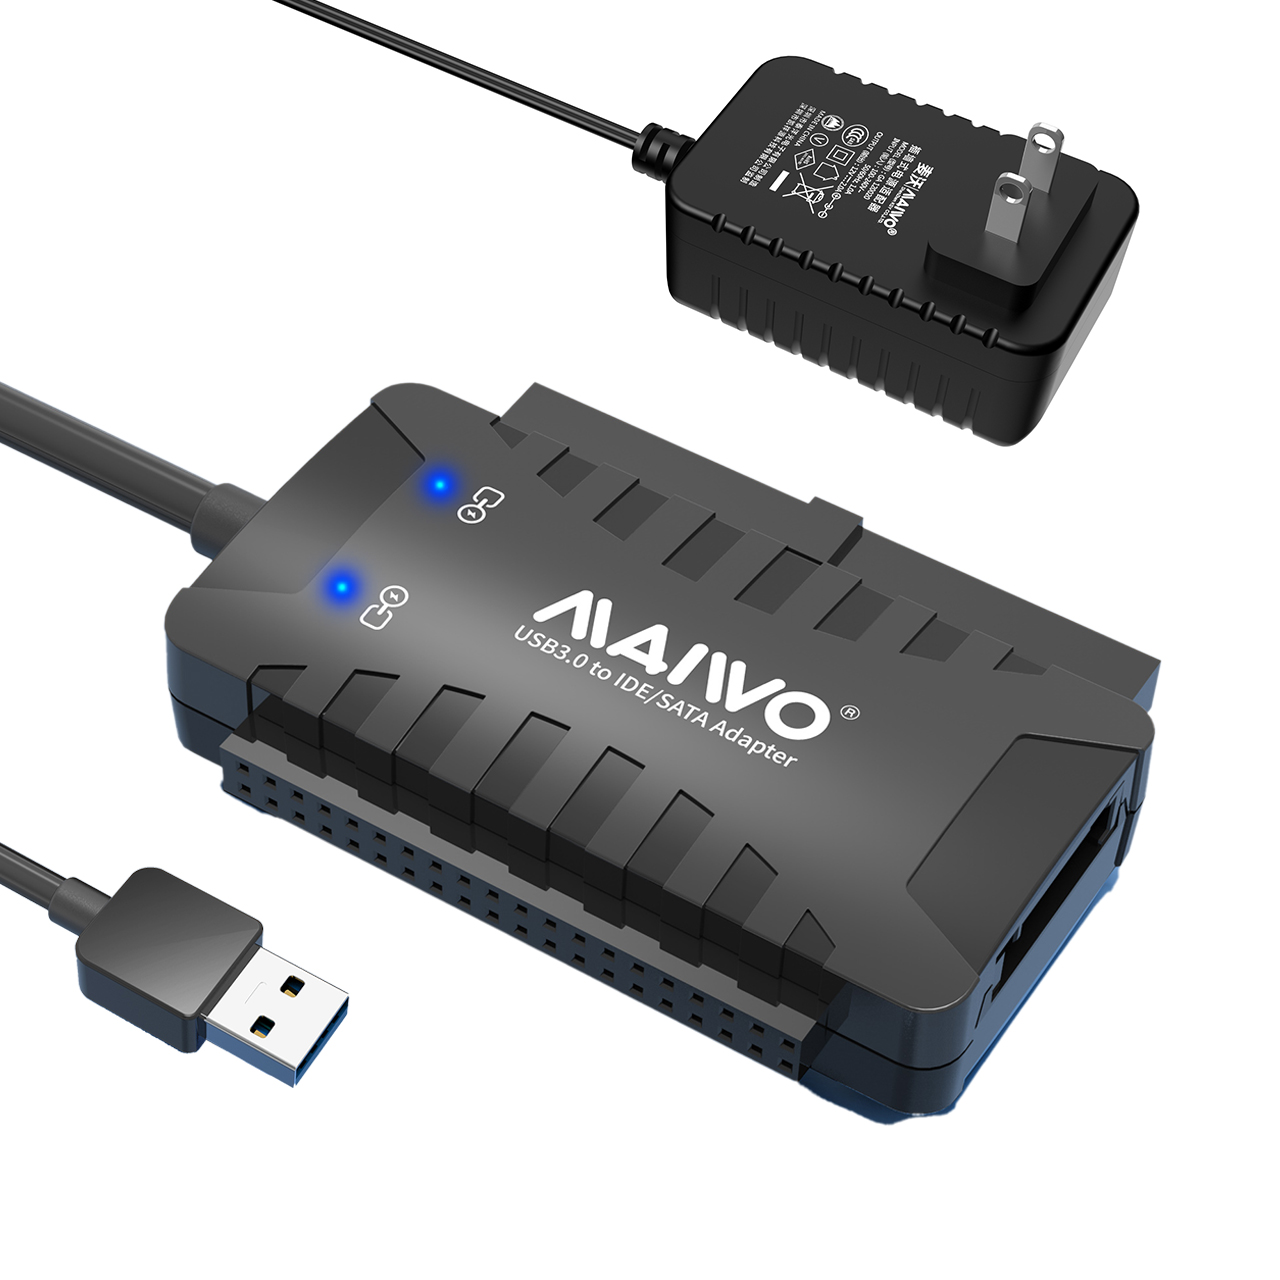 MAIWO K132U3IS SATA/IDE to USB 3.0 Adapter External Hard Drive Ultra Recovery Converter for Universa